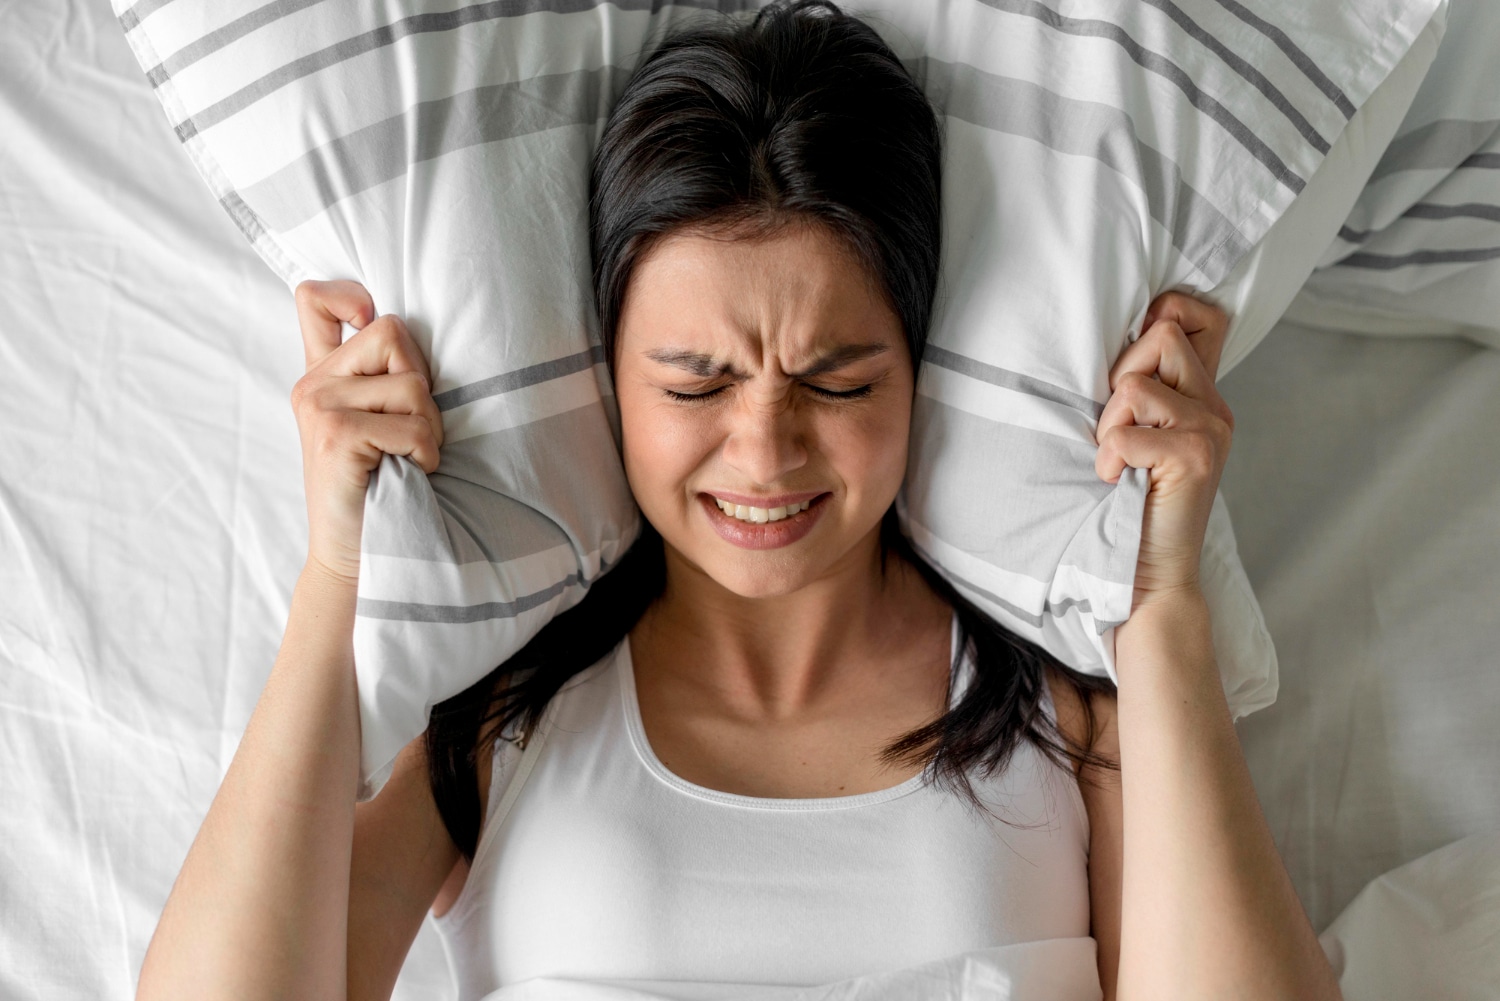 Lifestyle Changes For Managing Sleep Apnea